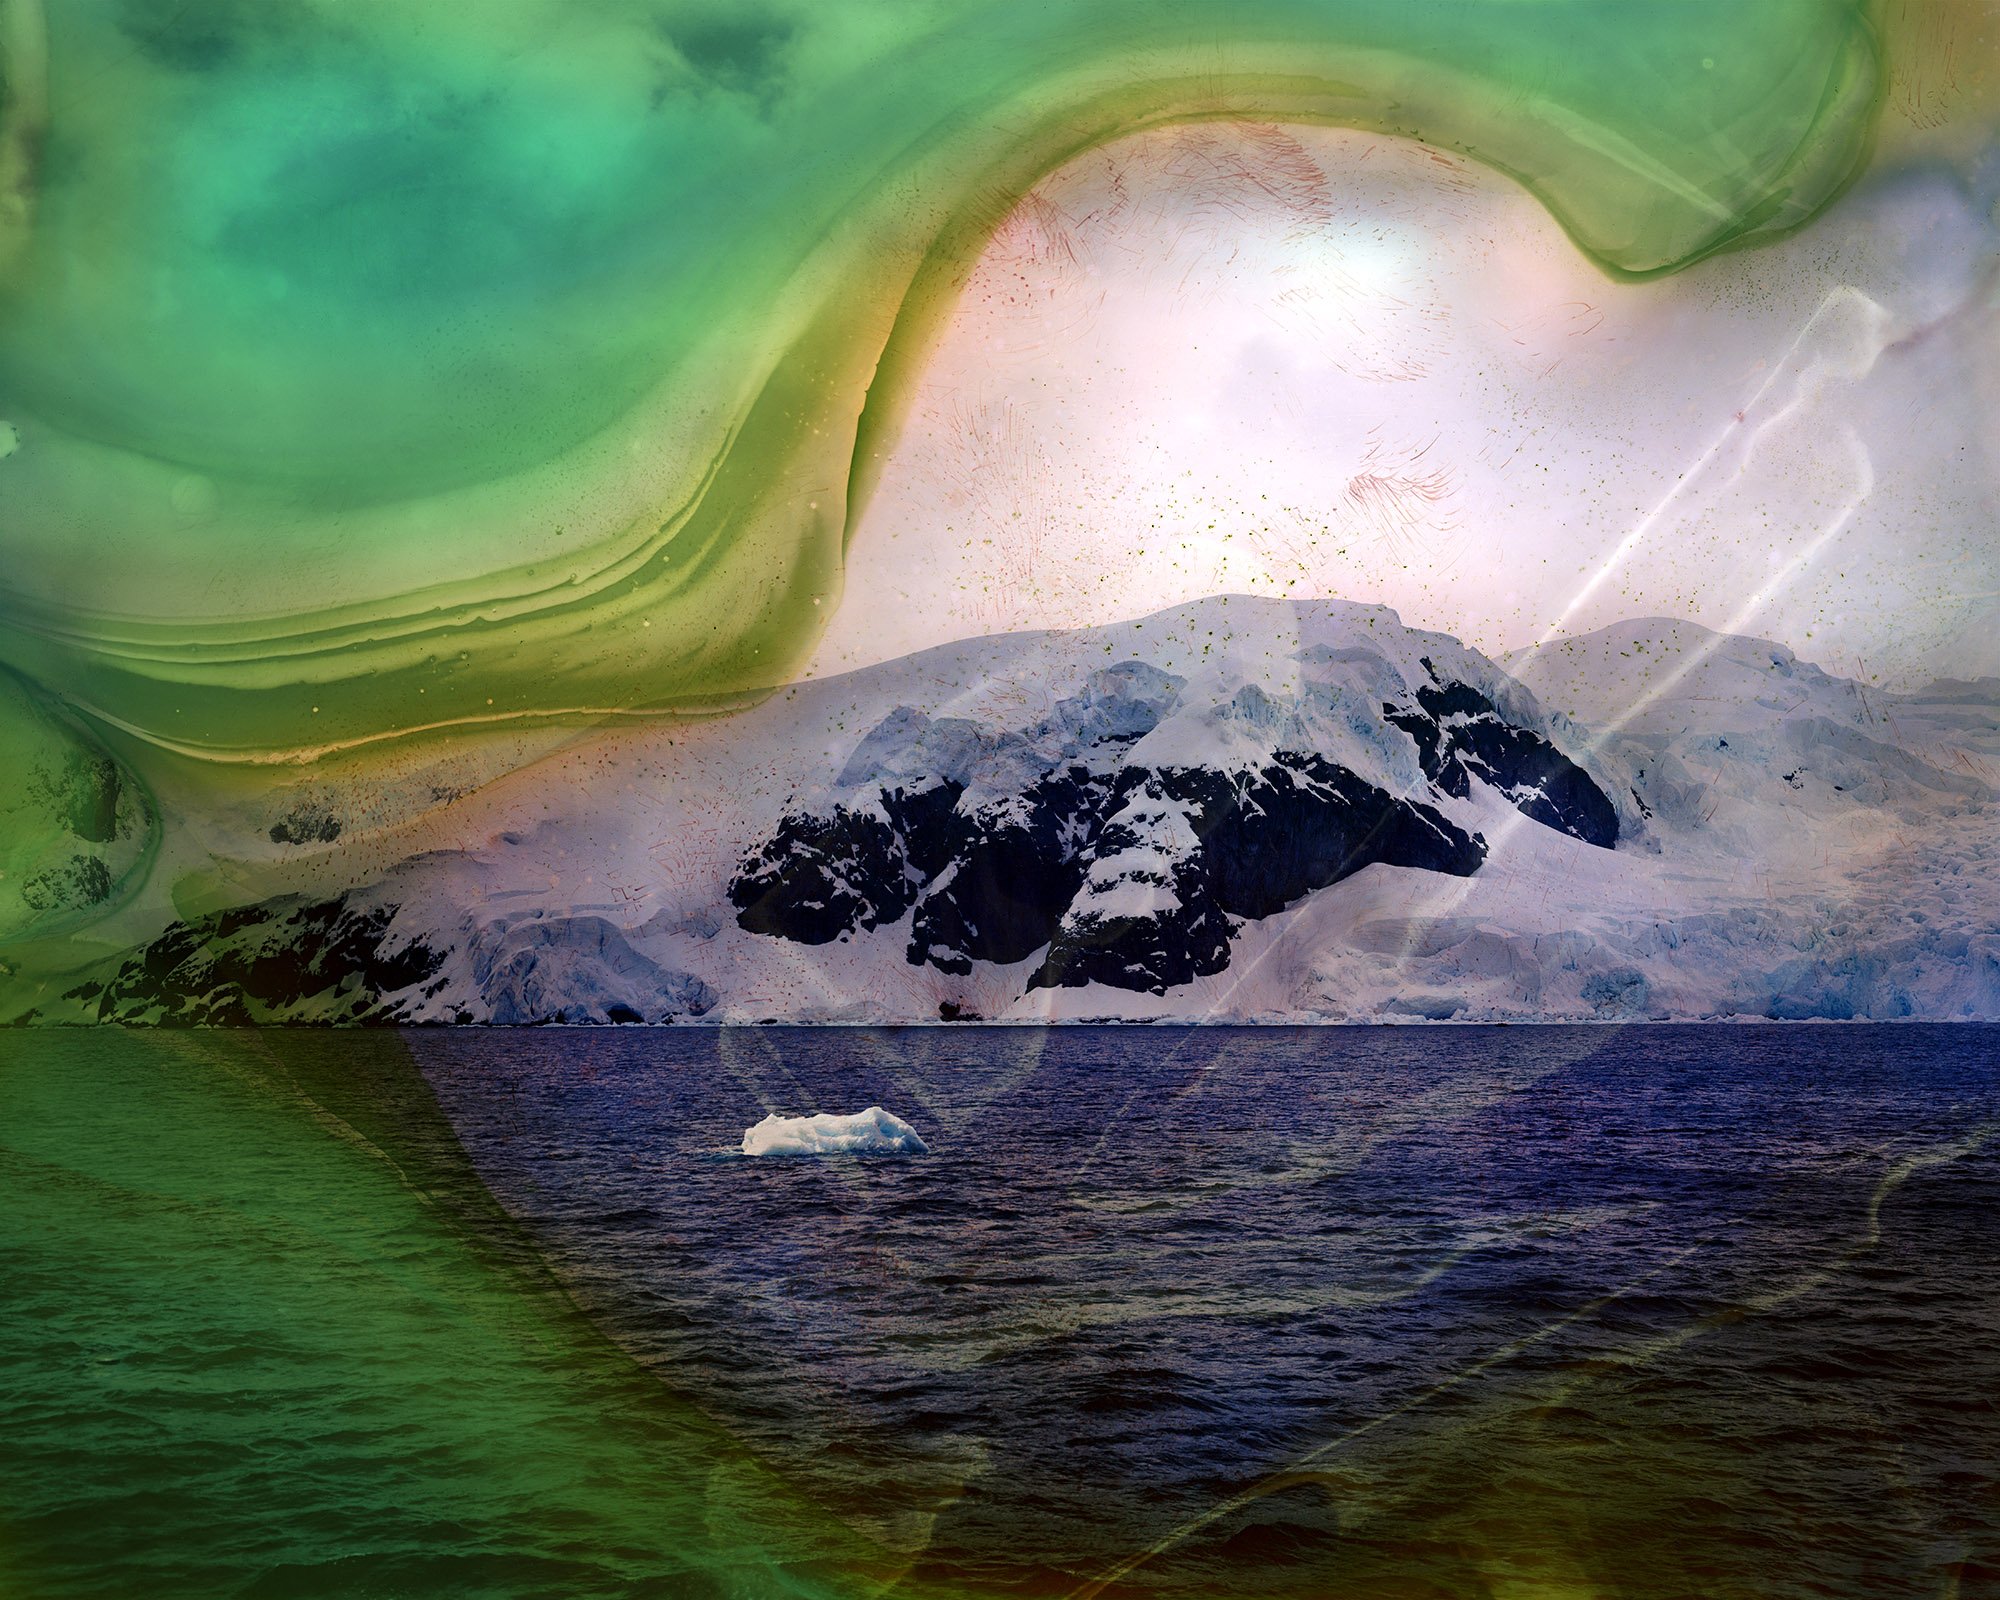  Antarctica #1, 2019 Chromira print from soaked film 